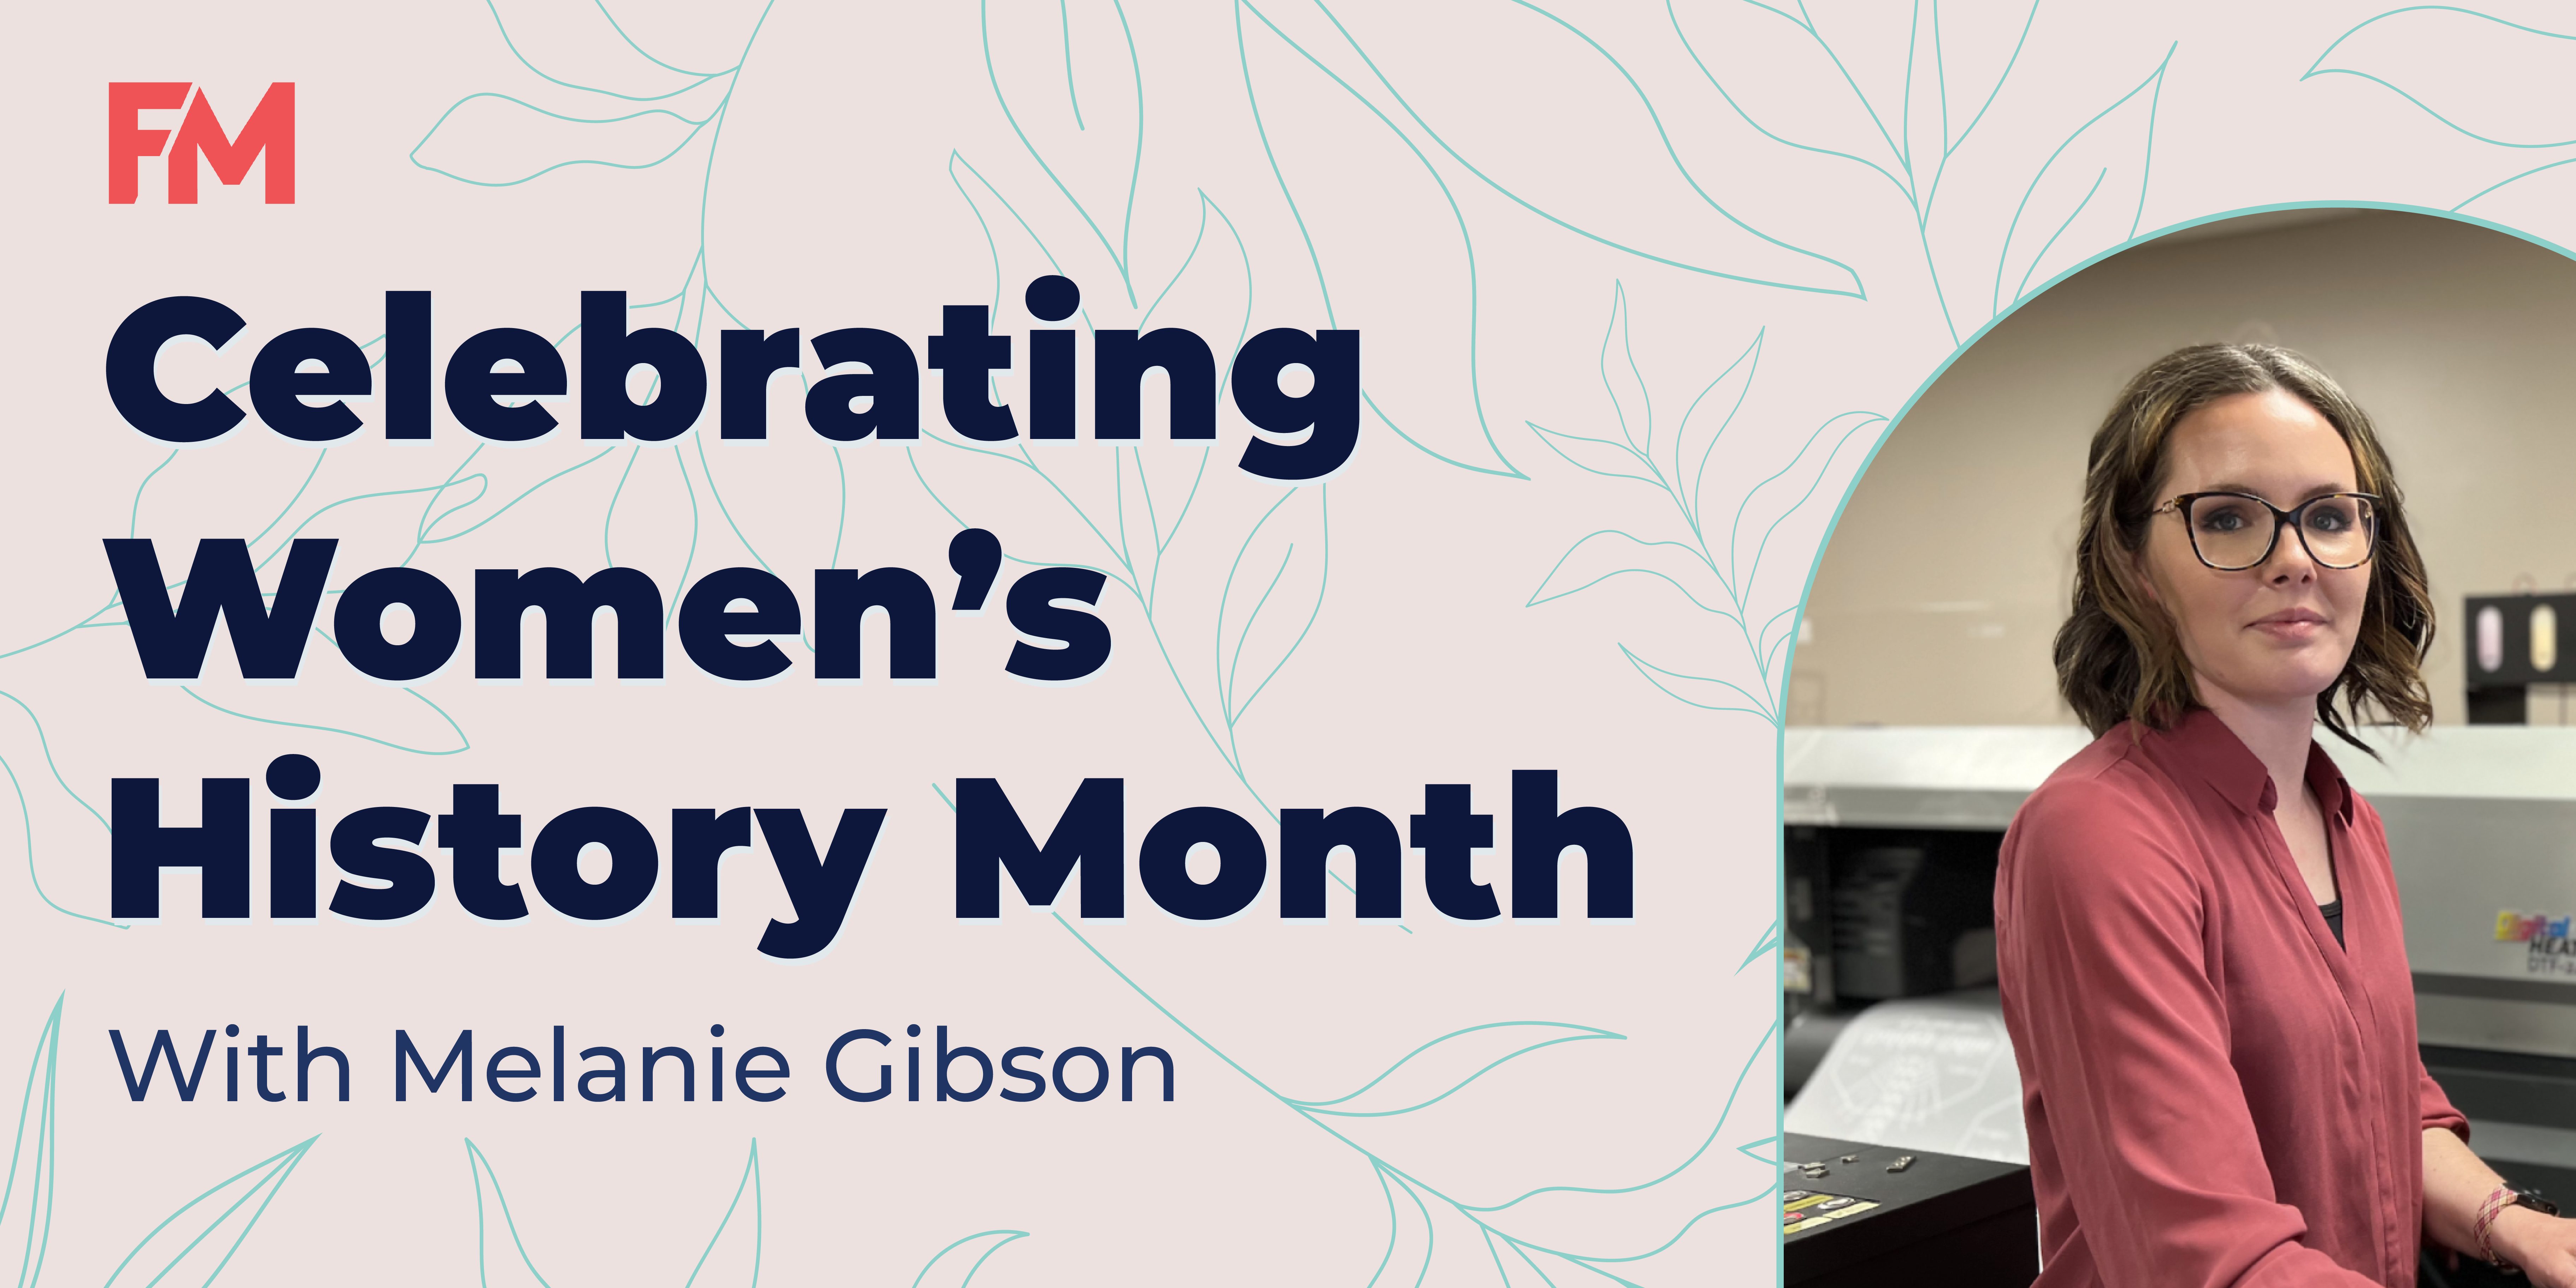 Women's History Month - Melanie Gibson